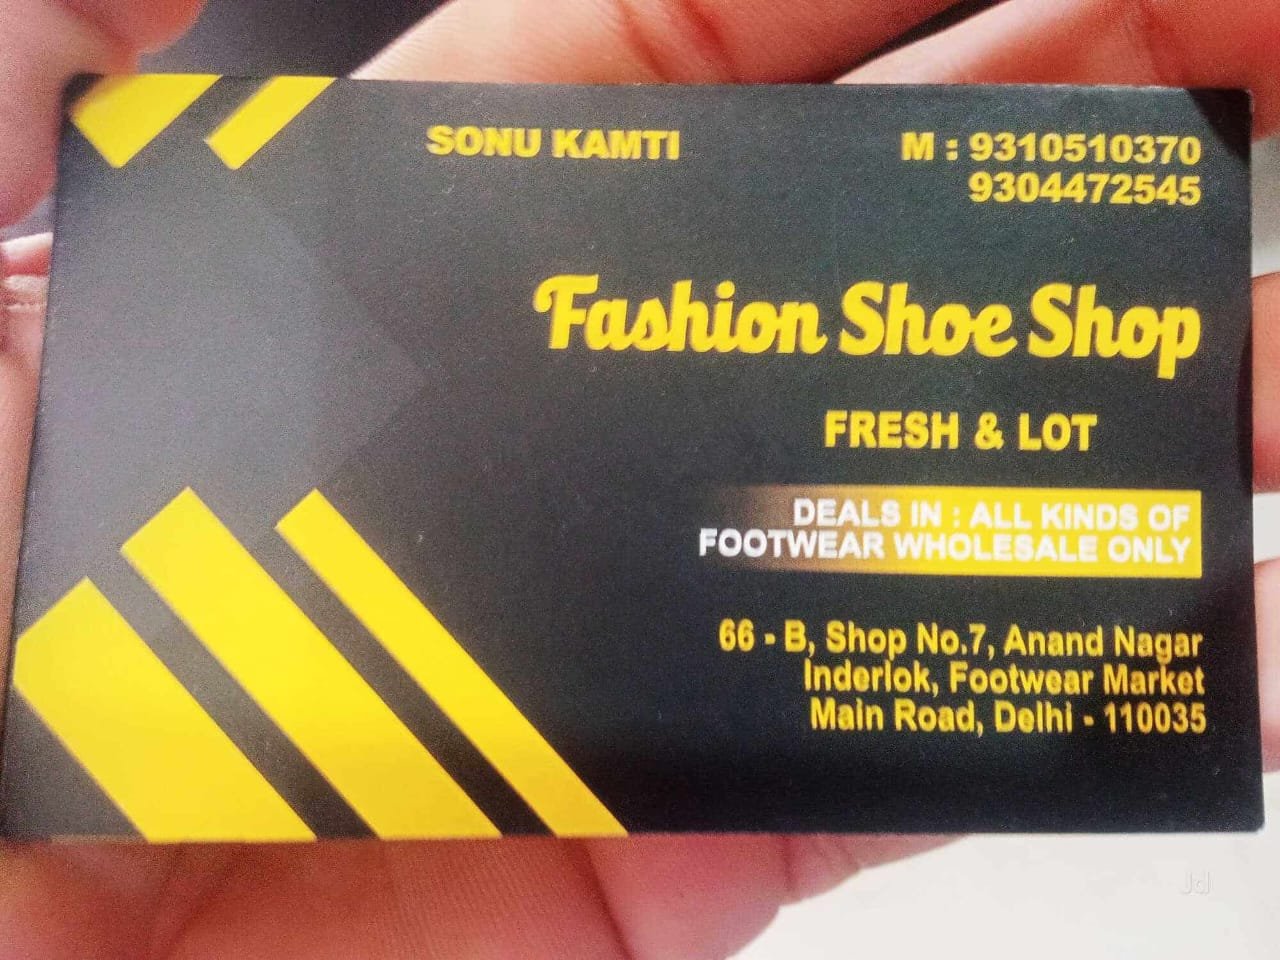 Fashion Shoe Shop